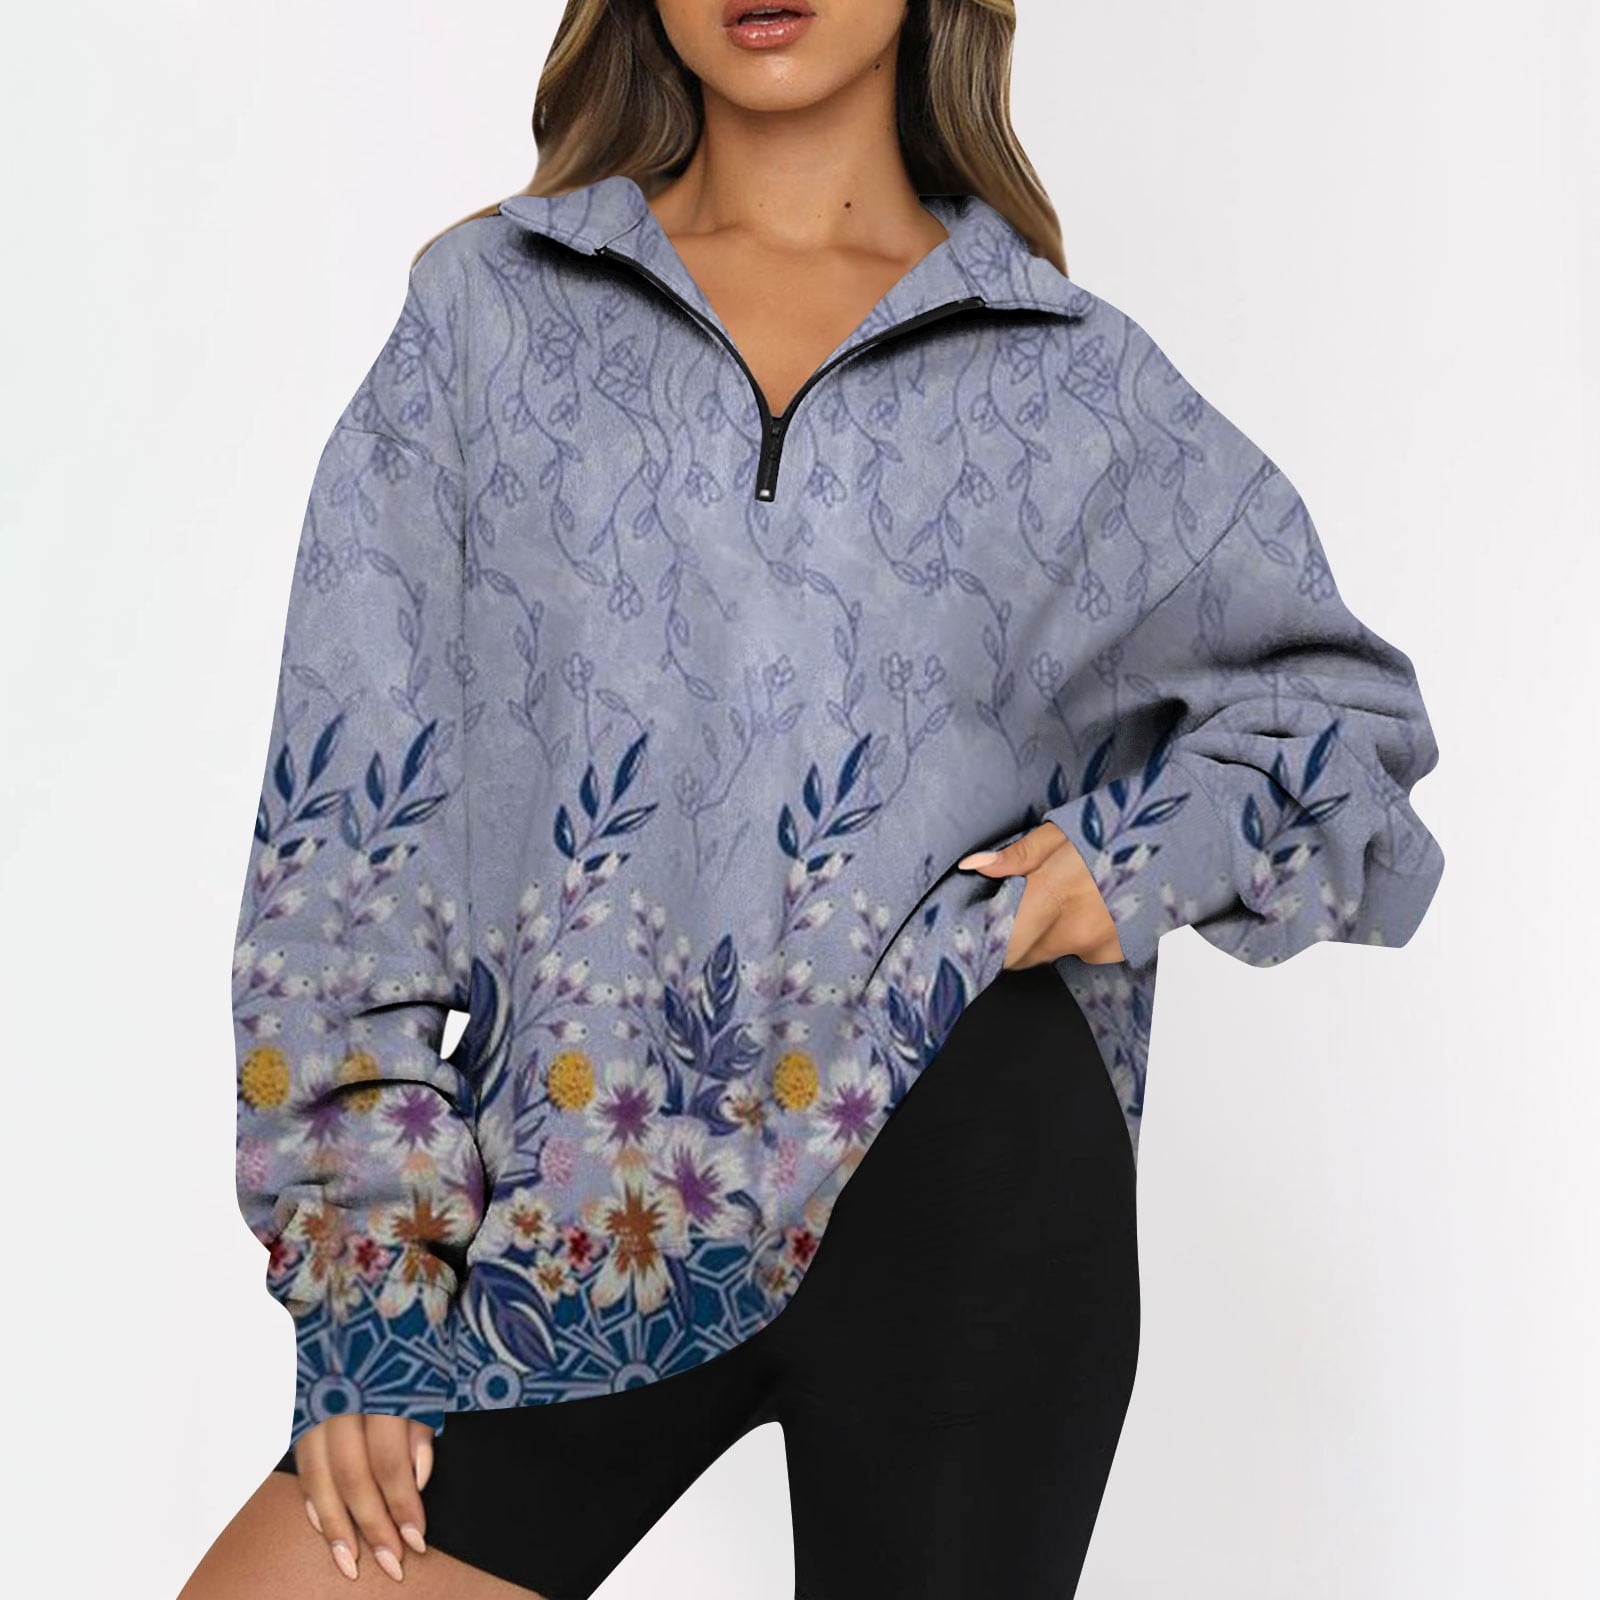 Umitay pullover sweatshirts for women Women's Casual Fashion Long Sleeve  Print Zip Sweatshirt Top 